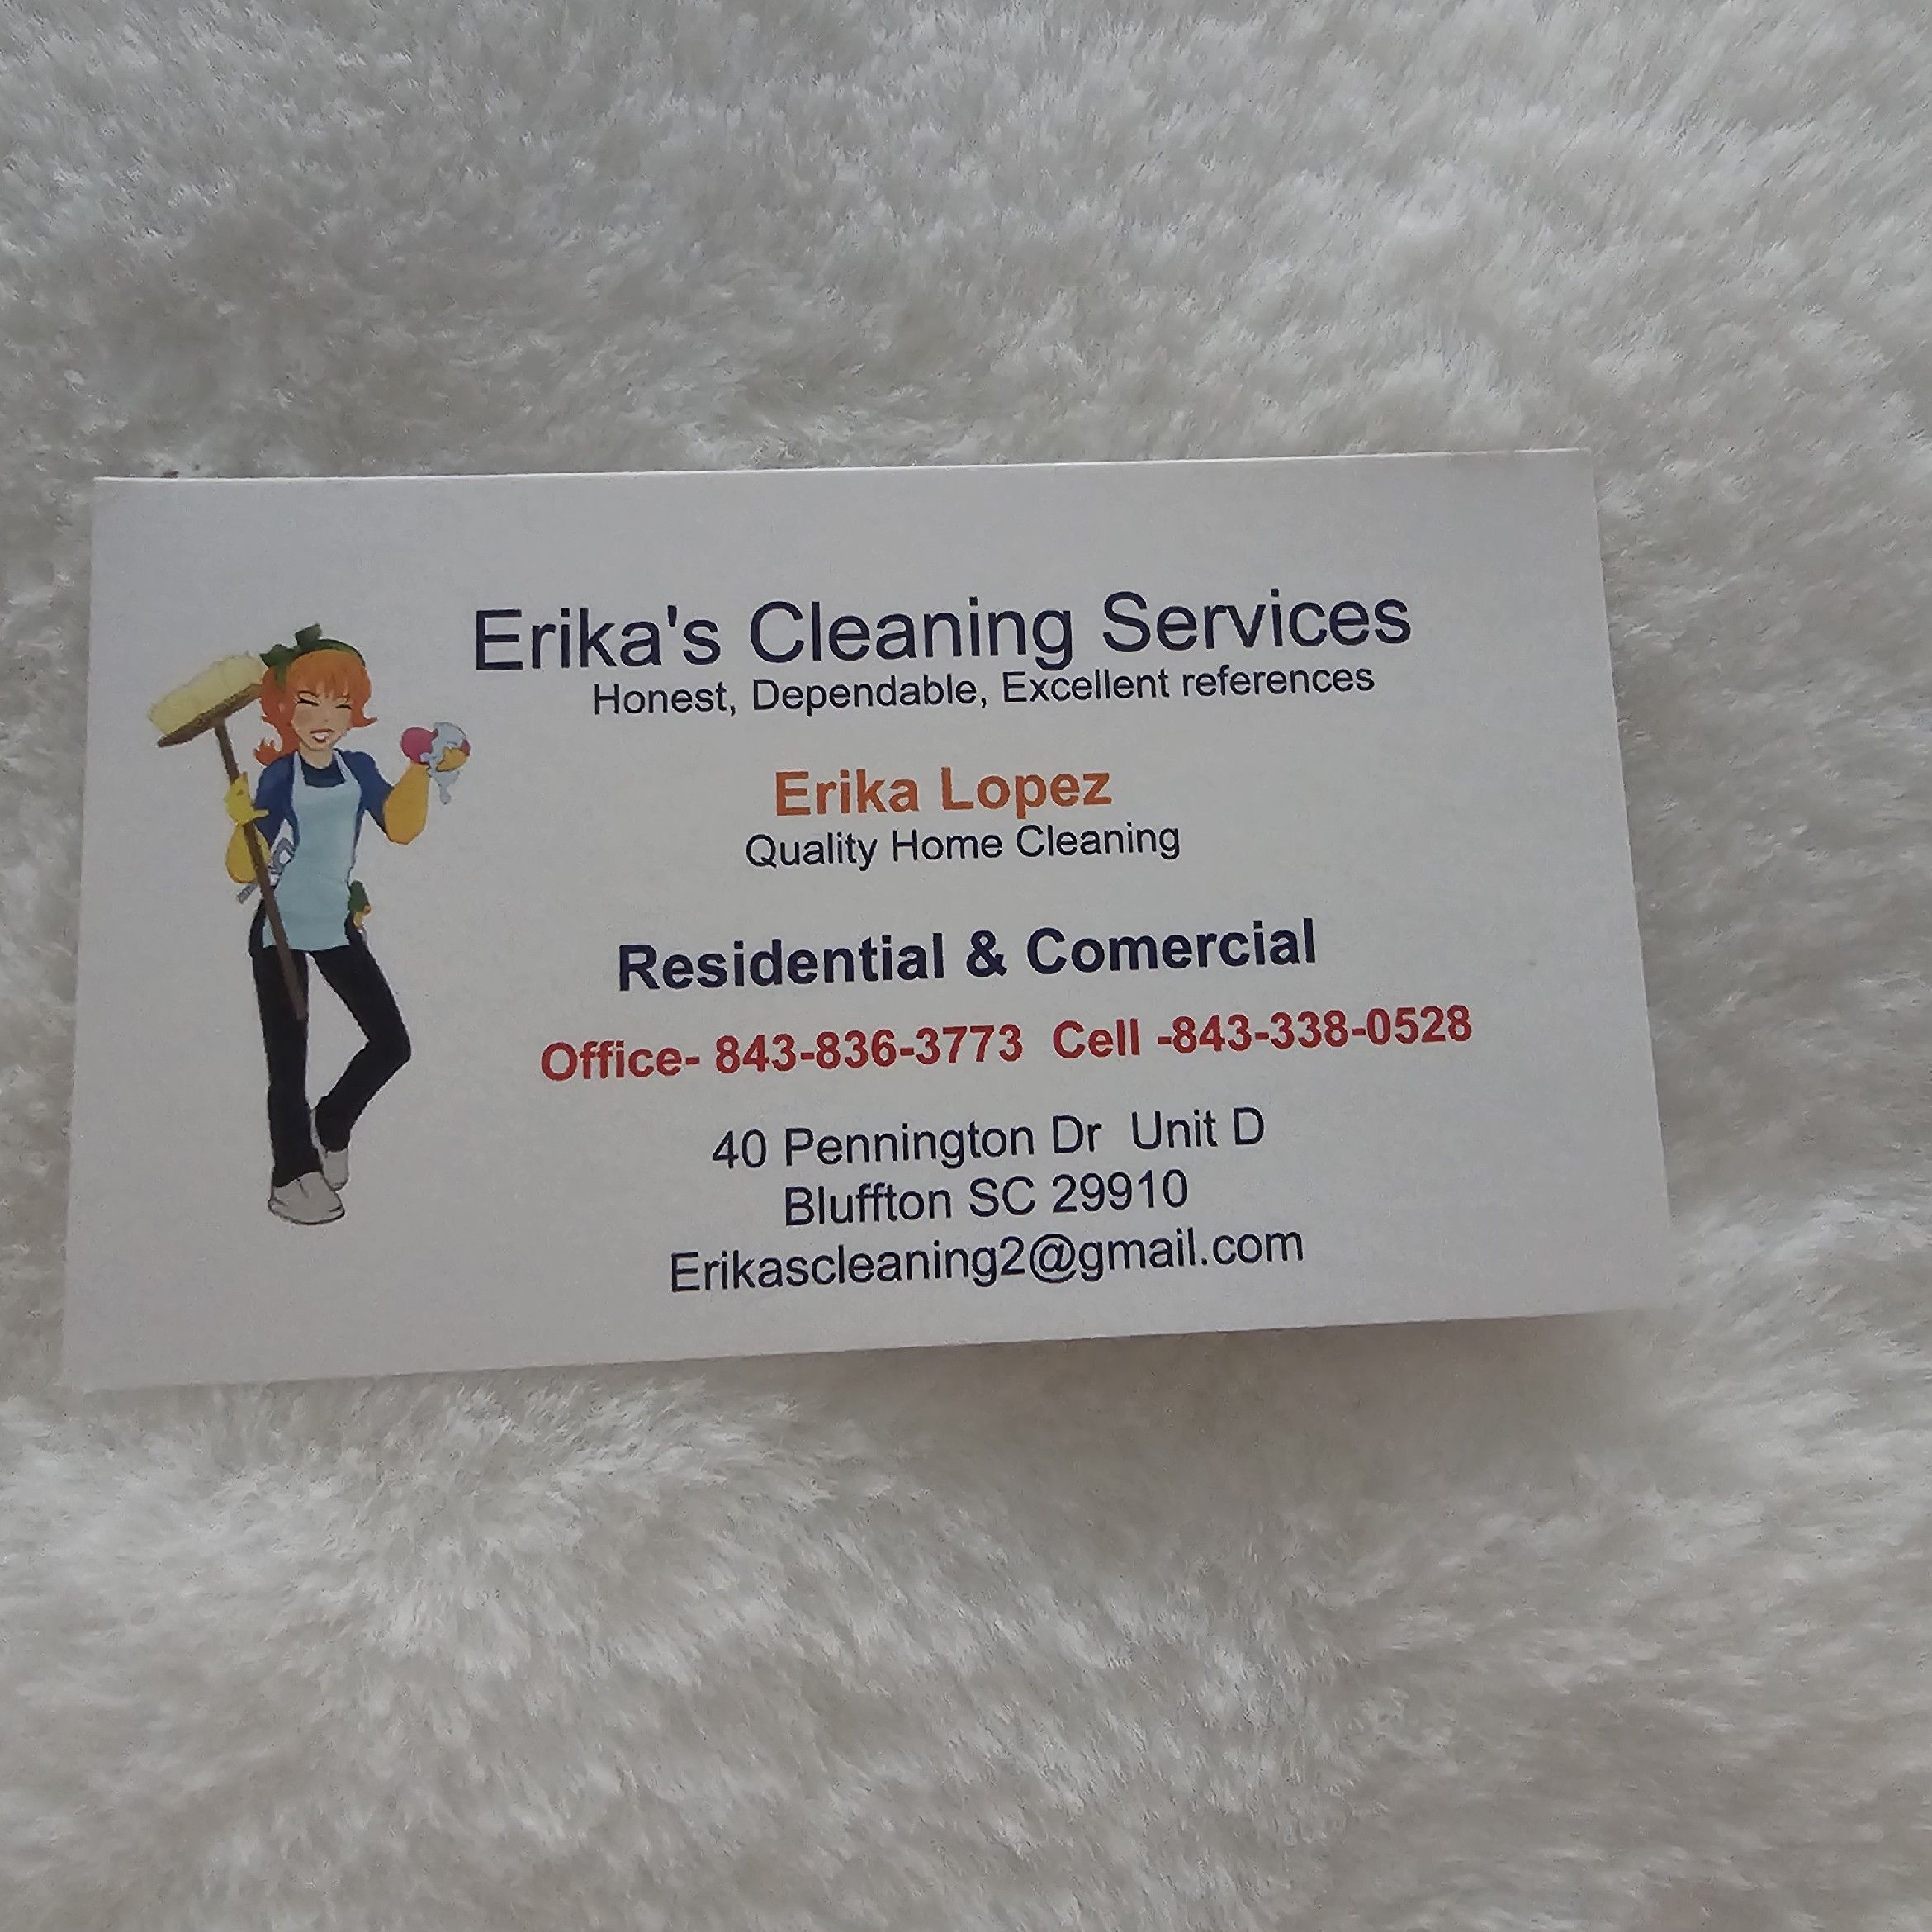 Erikas Cleaning Services LLC, Bluffton, 29910